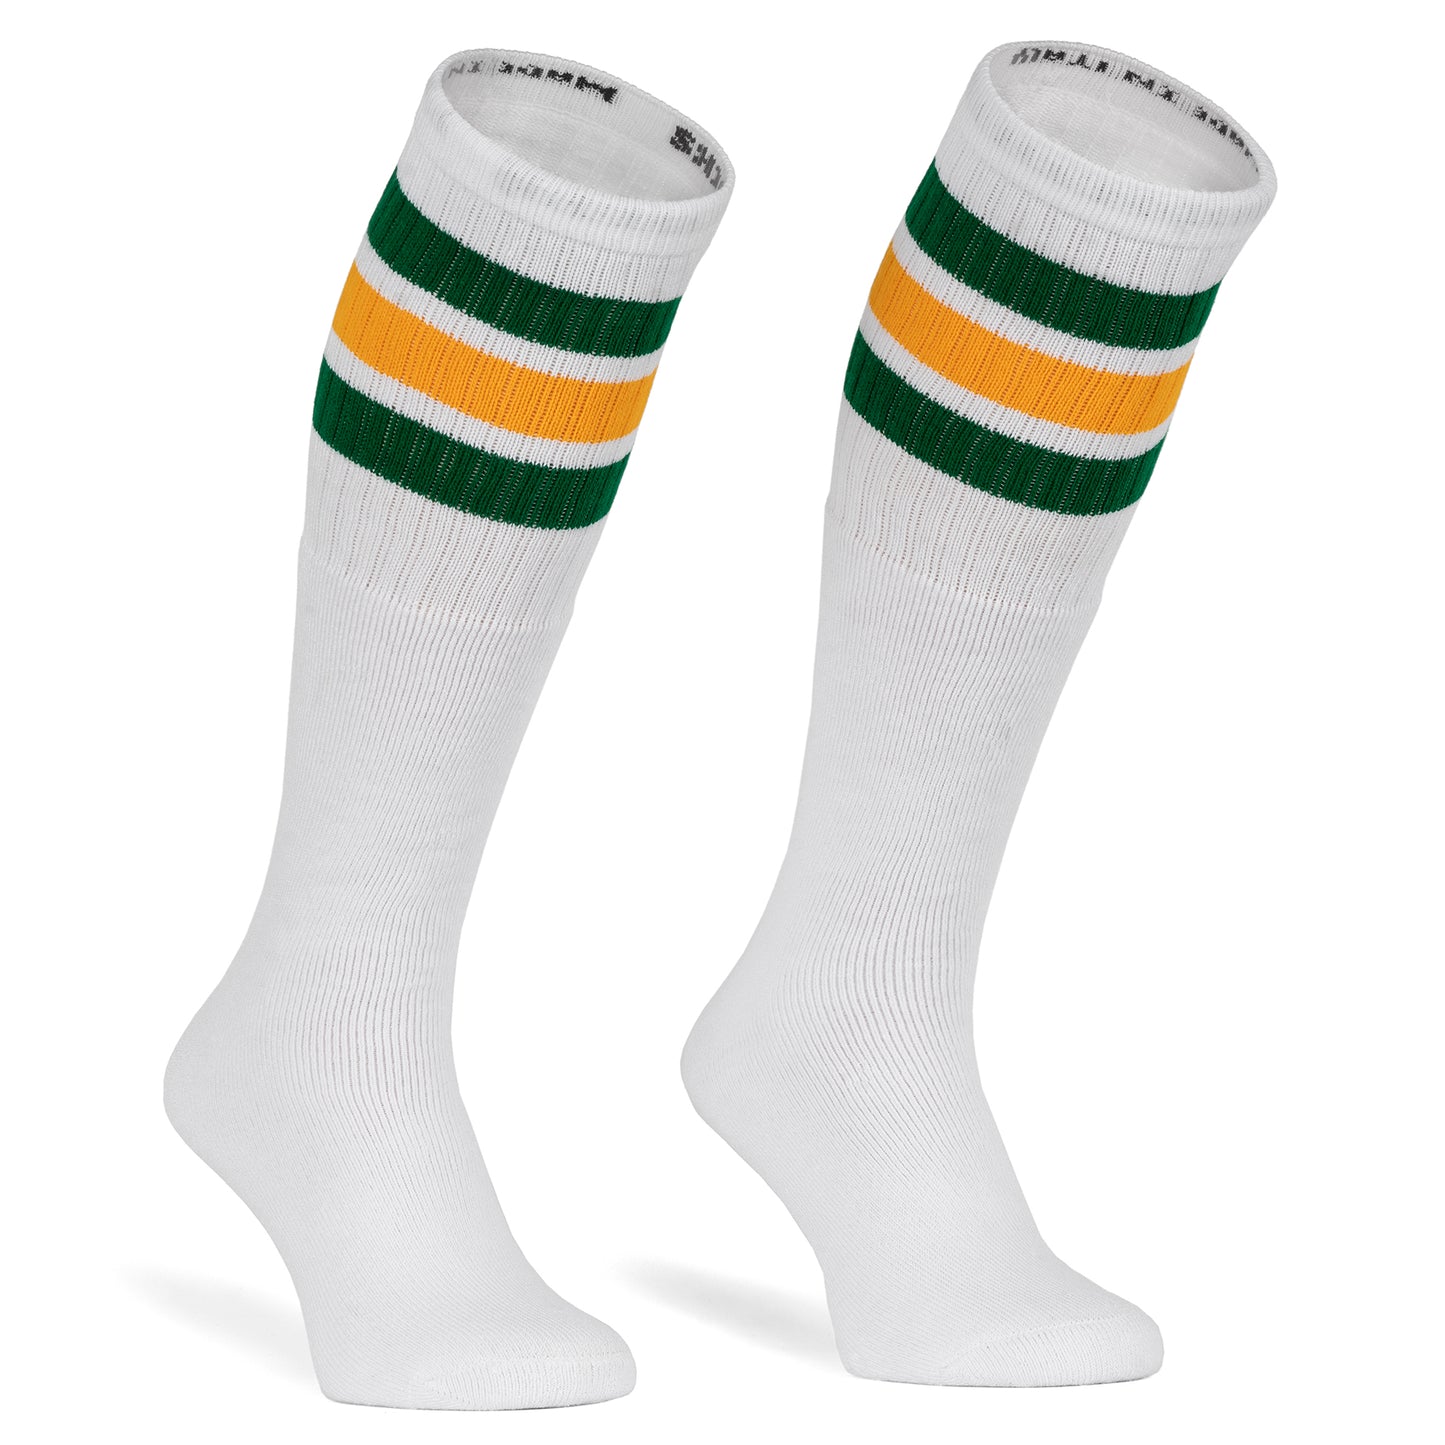 Skatersocks 25 Inch Knee High Tube Socks White / green and yellow striped - Phoenix 212 Clothing